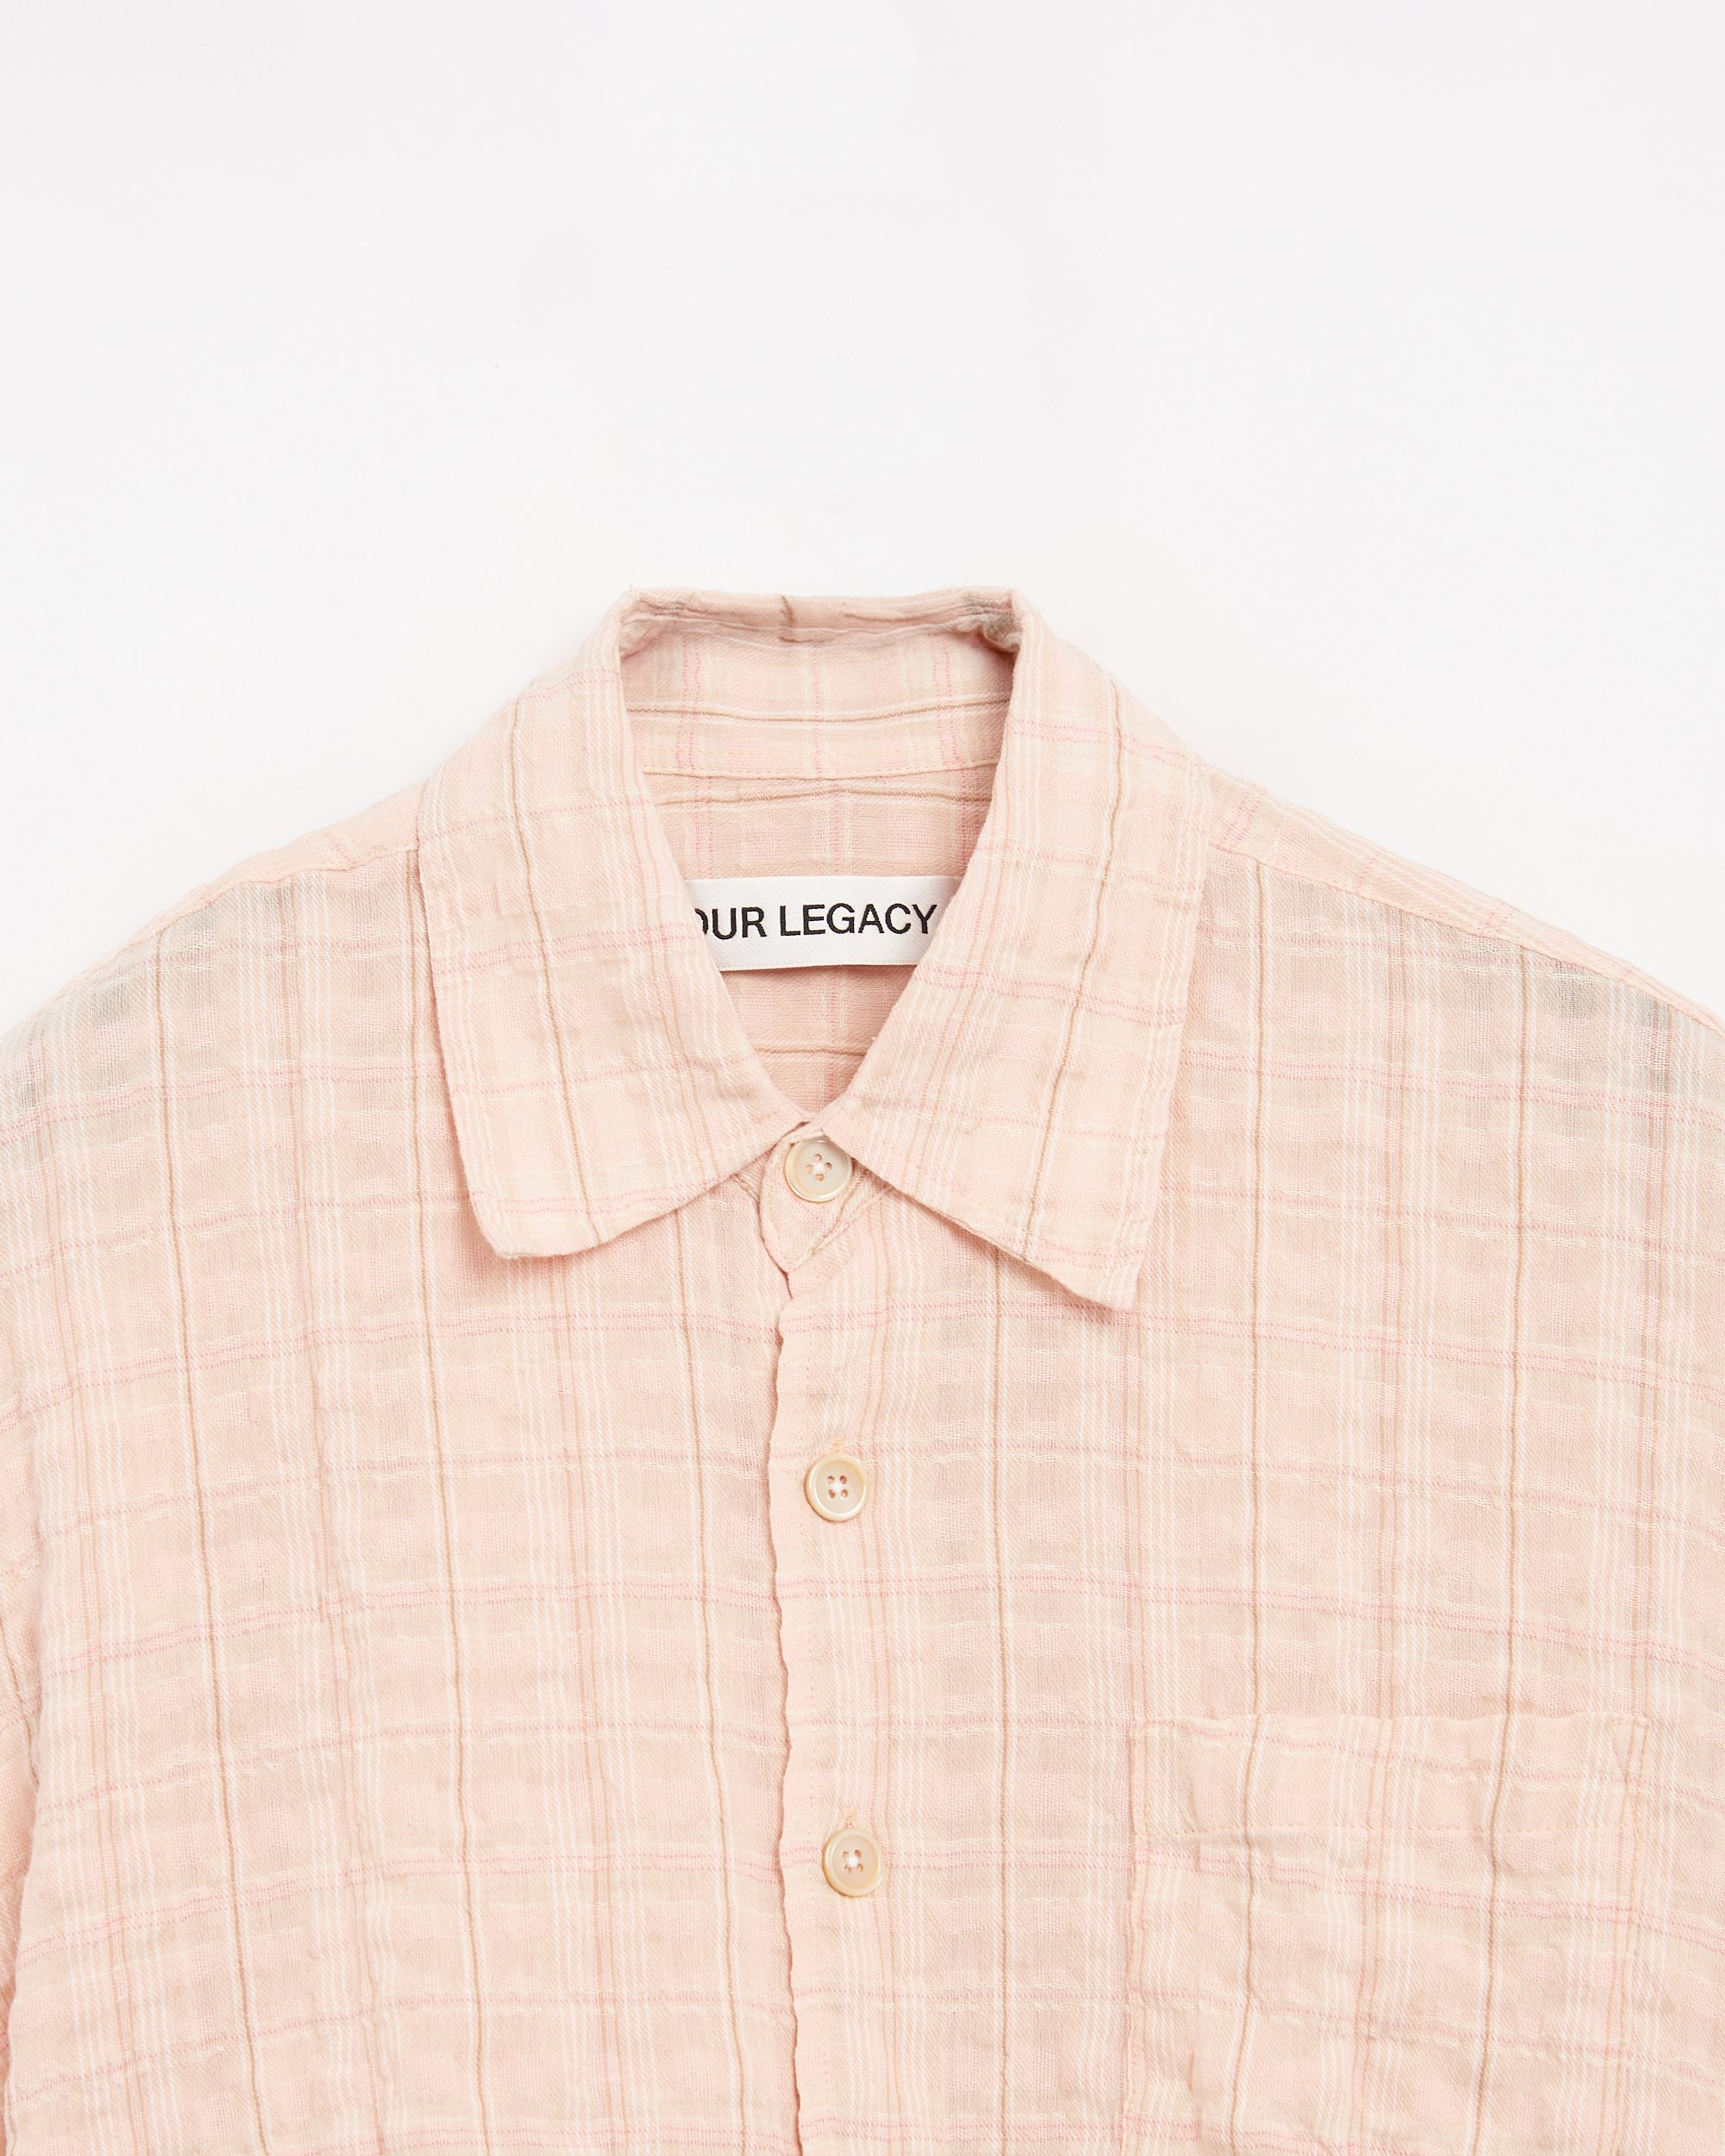 Our Legacy Borrowed Men's Shirt Pink M2242BP | FOOTDISTRICT